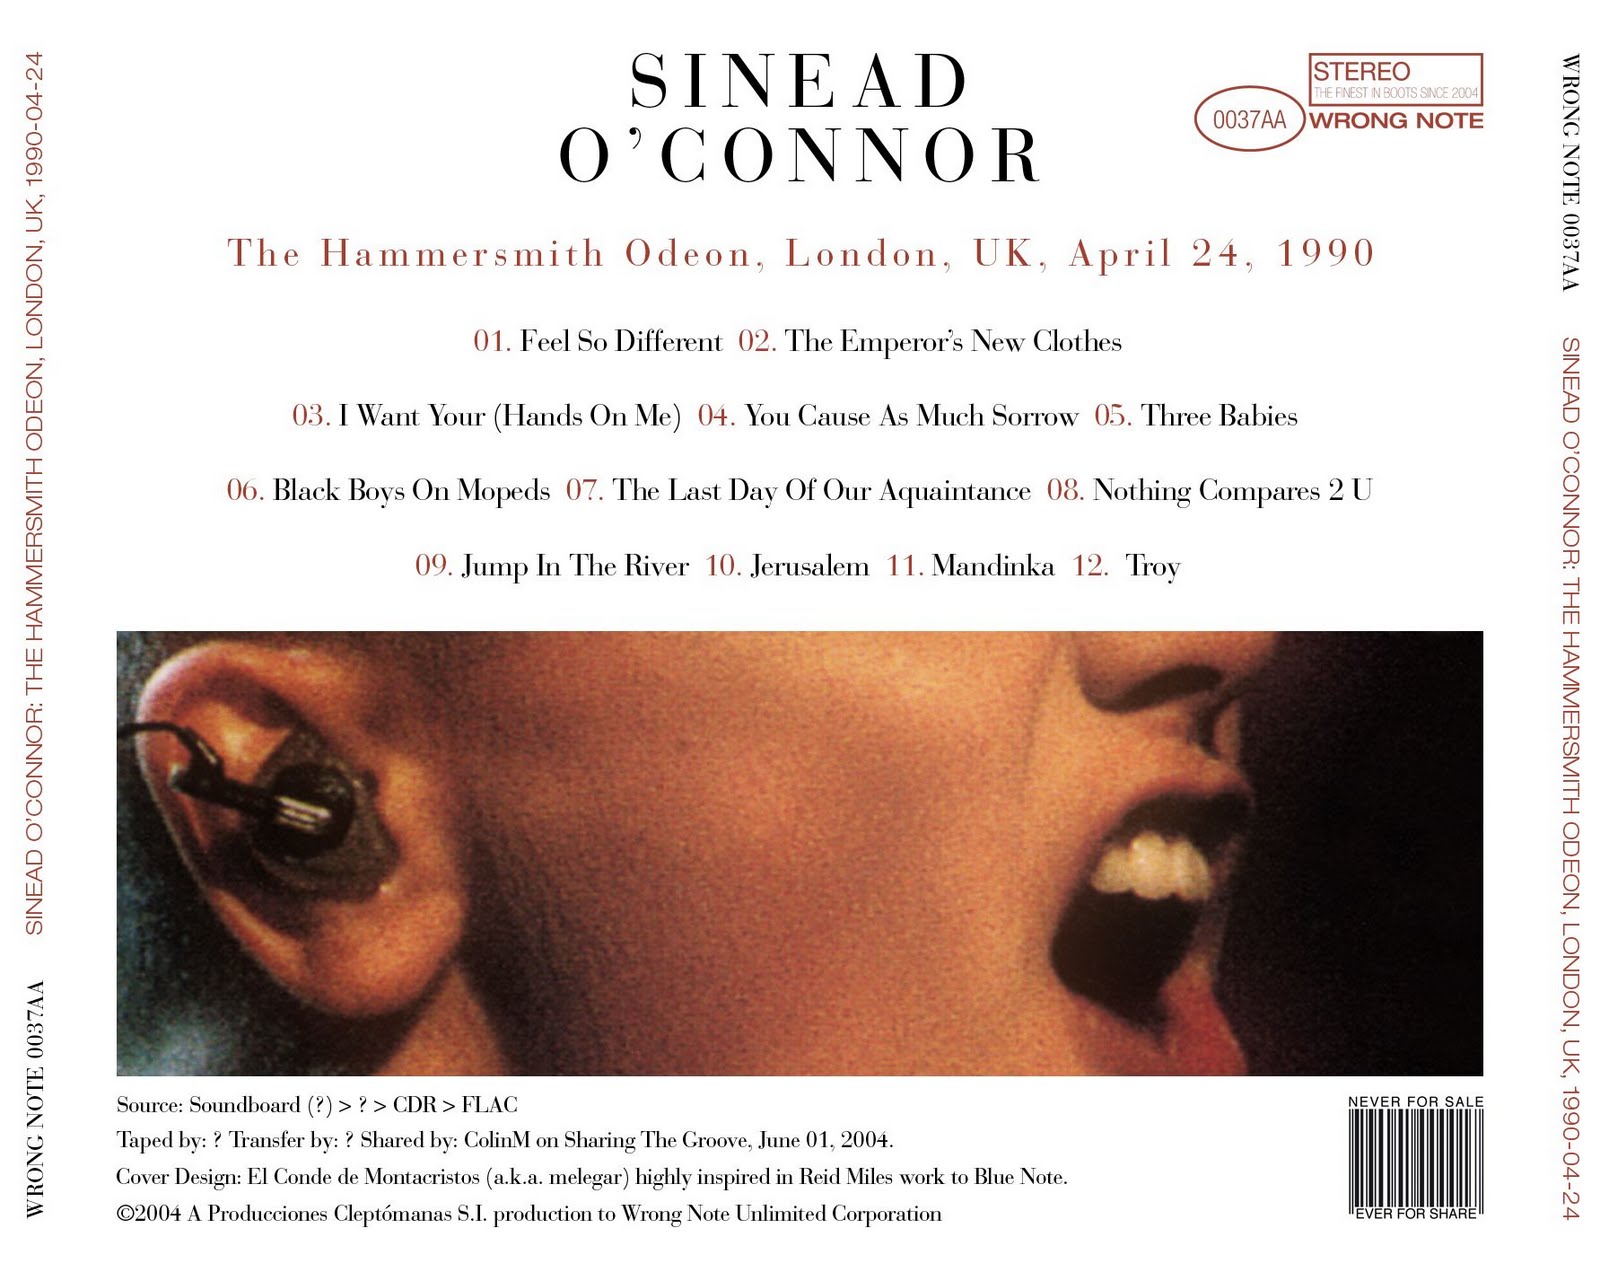 http://2.bp.blogspot.com/_rB7DadgtLuM/Sw84ZTJnXpI/AAAAAAAAAQA/Svq1Gdd2wzY/s1600/The+Hammersmith+Odeon,+London,+UK+(April+24,+1990)_back.jpg